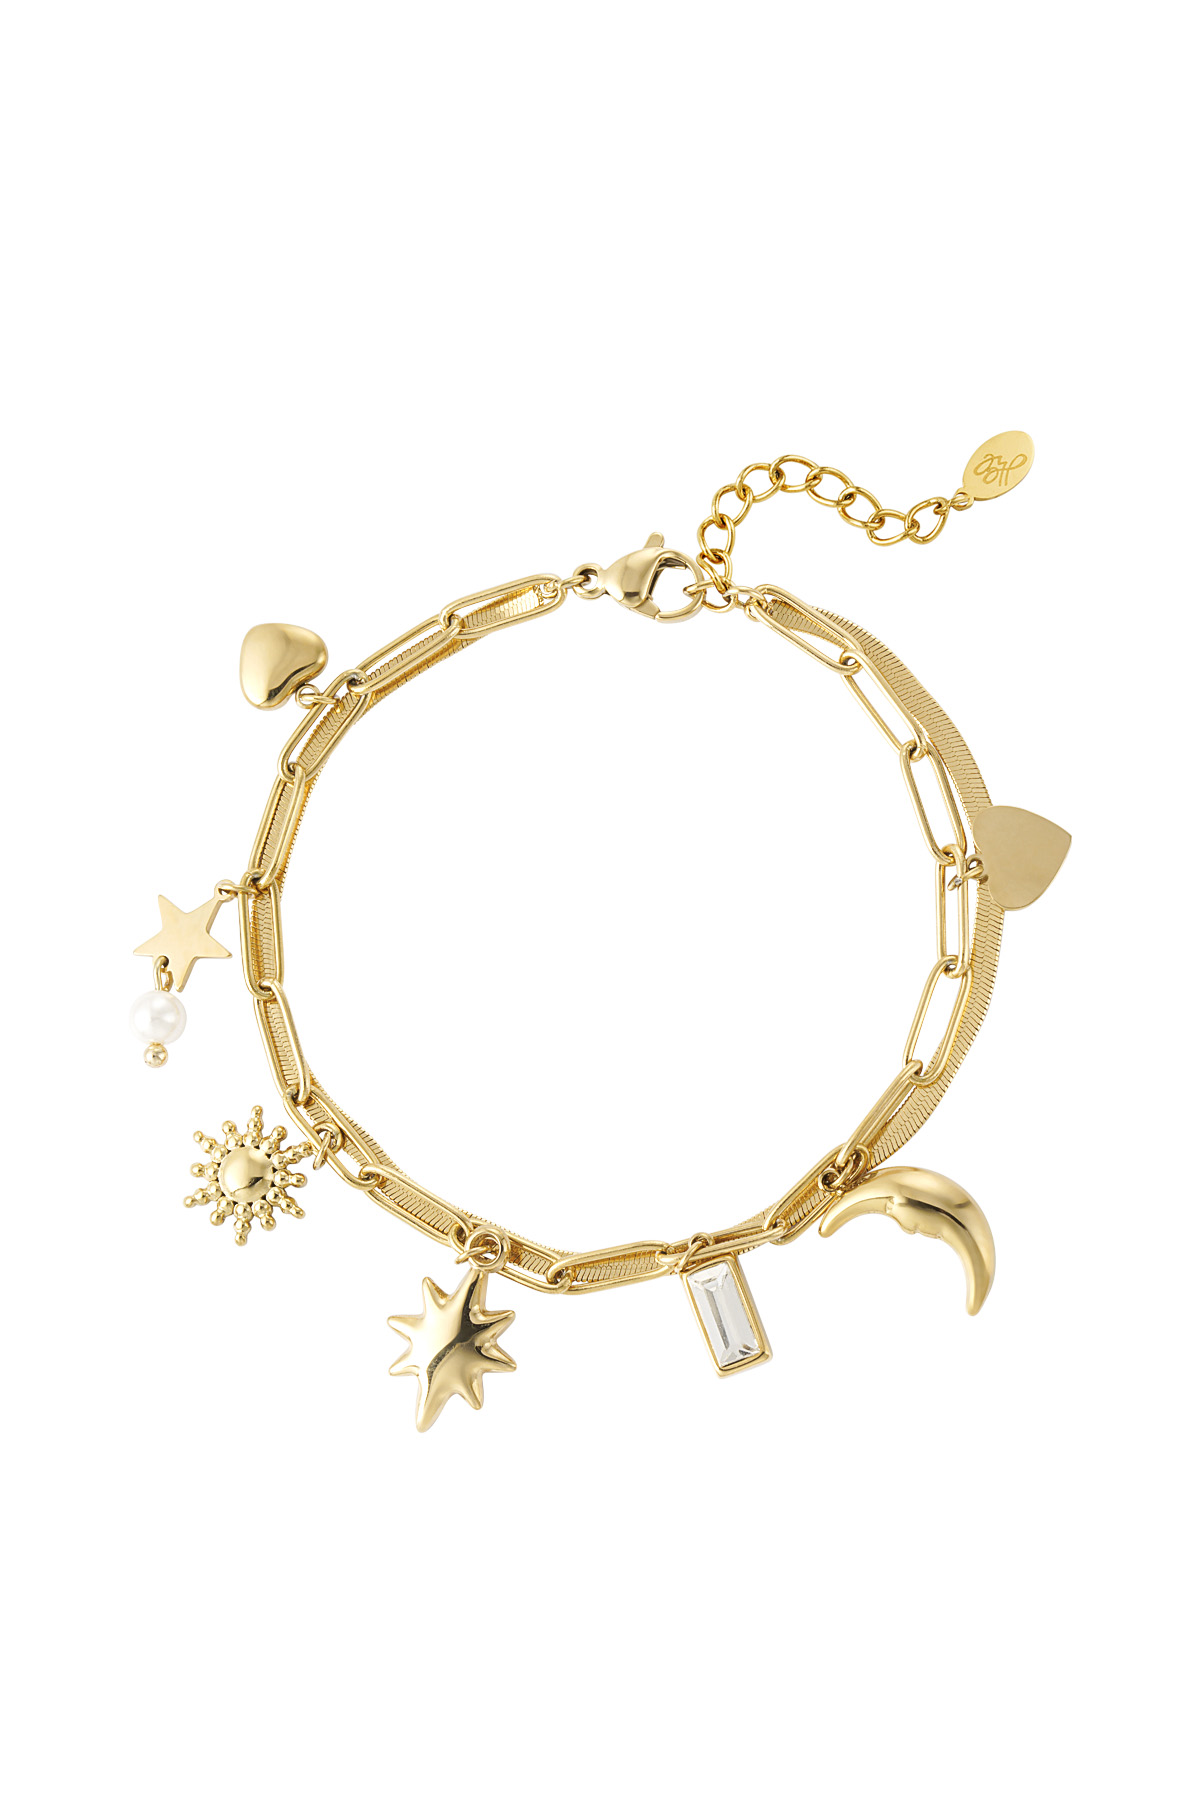 Tag- und Nacht-Charm-Armband – Gold h5 